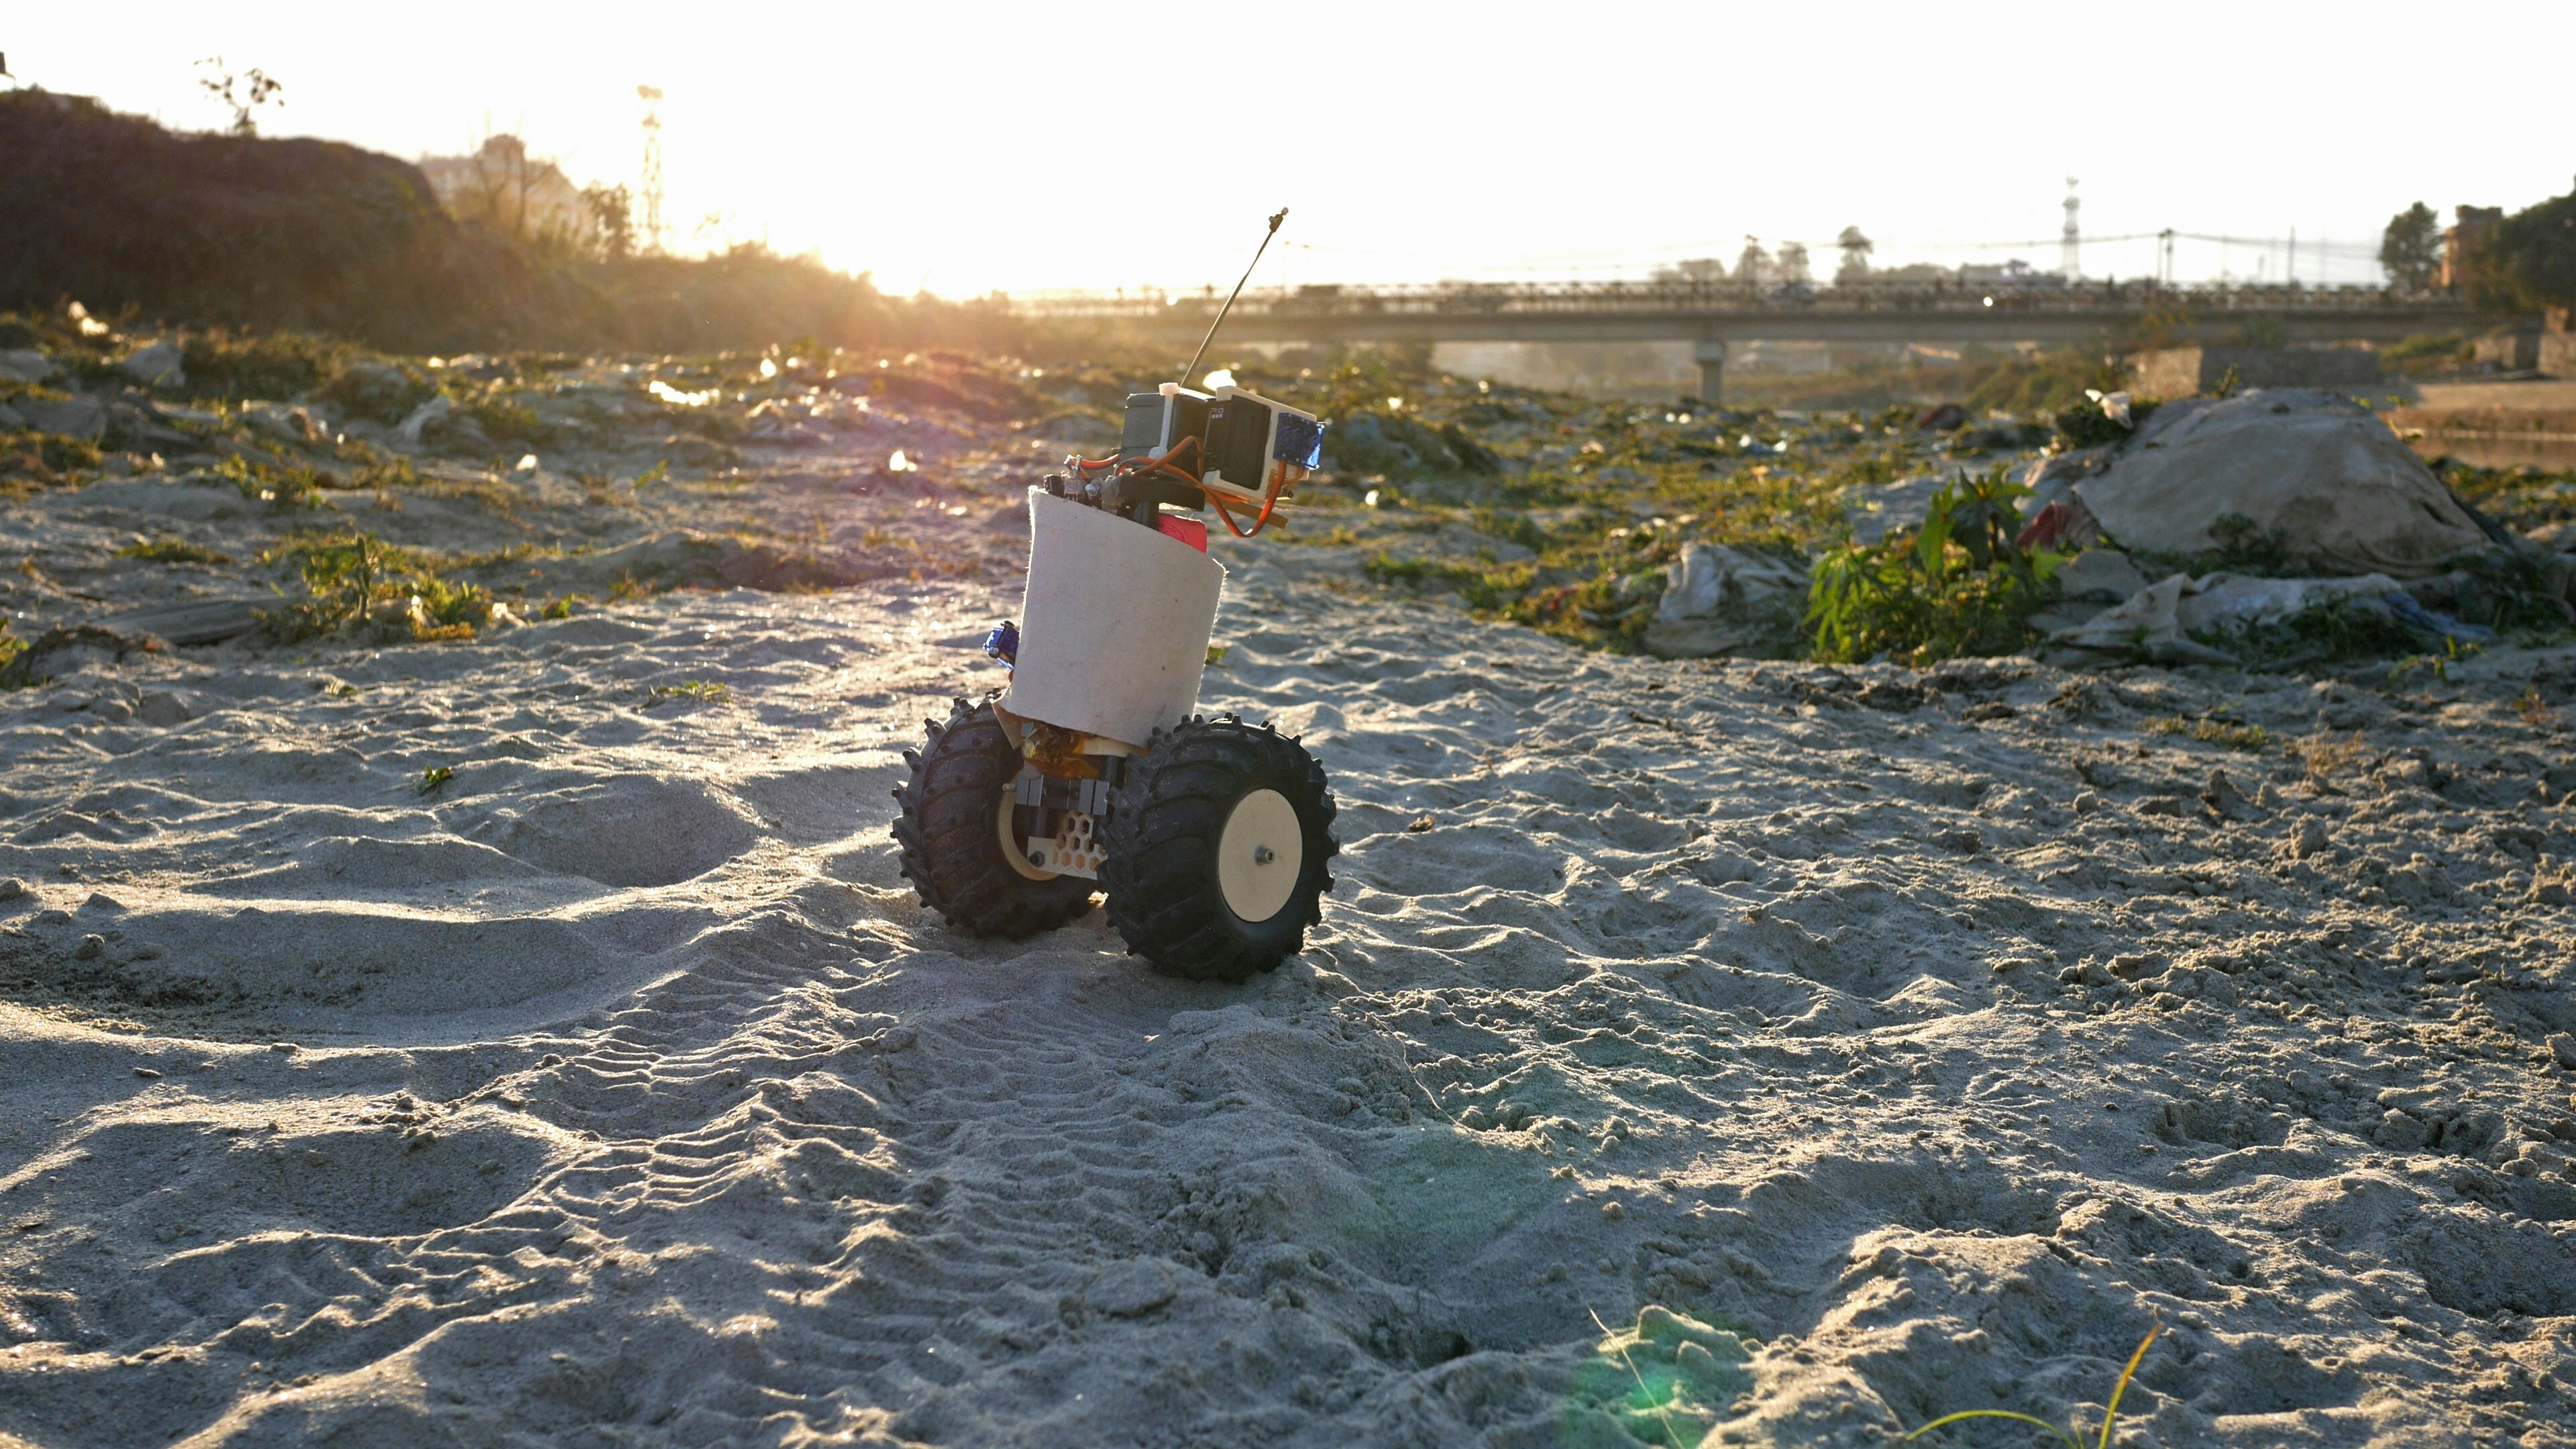 A custom-built robot rolling across sand on an urban site.